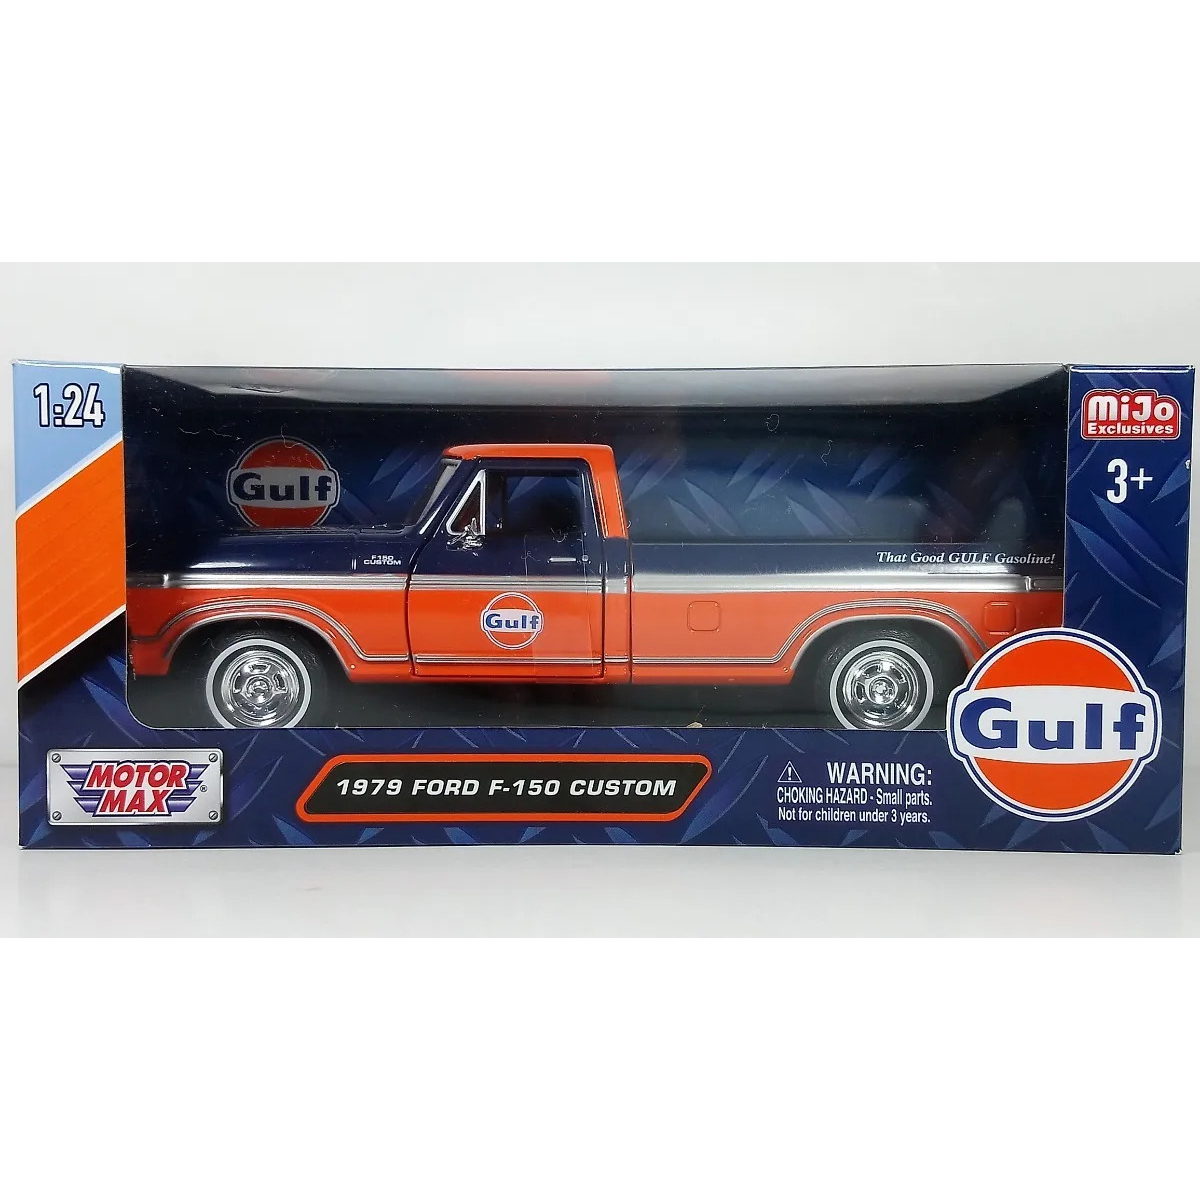 Motormax 1979 Ford F-150 Custom Pickup Truck "Gulf" Dark Blue and Orange 1/24 Diecast Model Car by Motormax